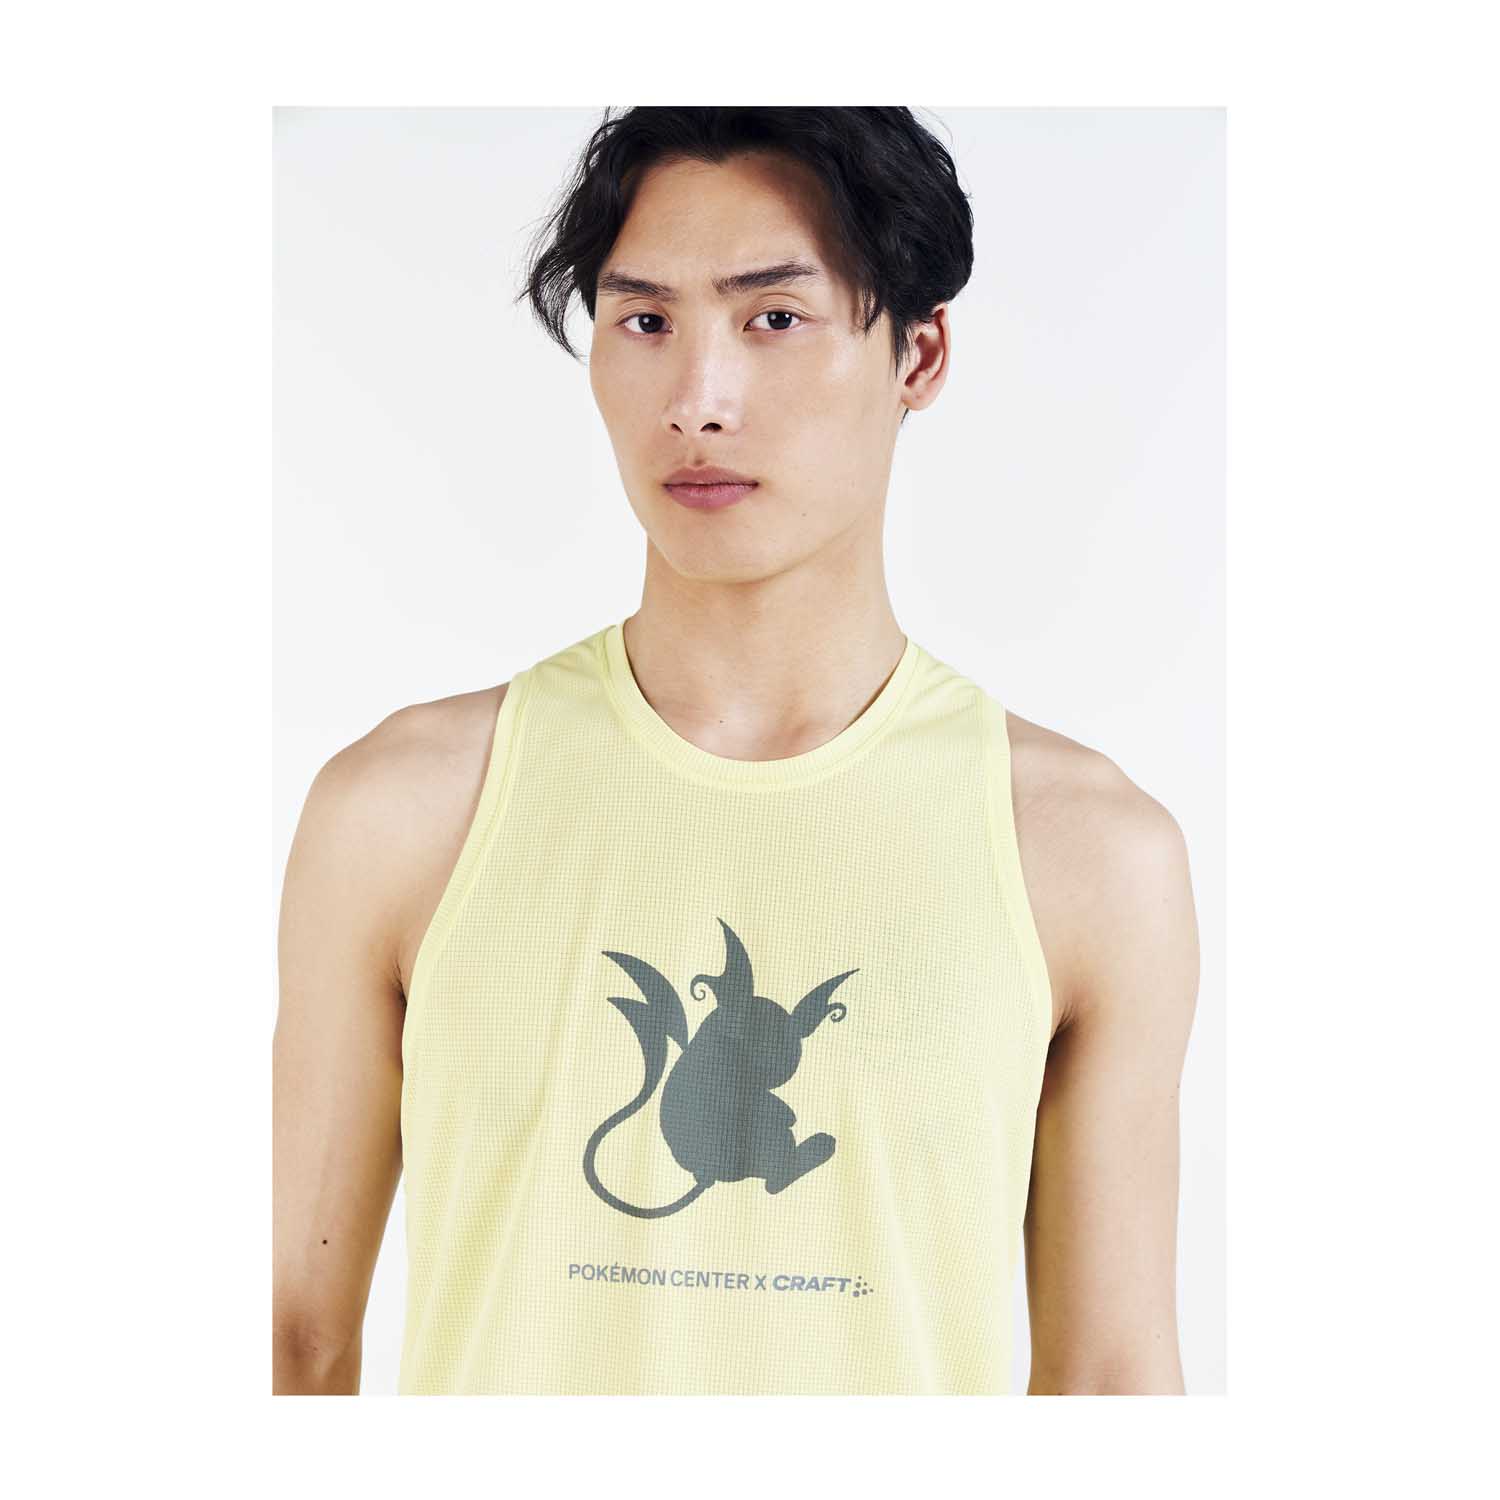 Pokémon Center × Craft Sportswear Line